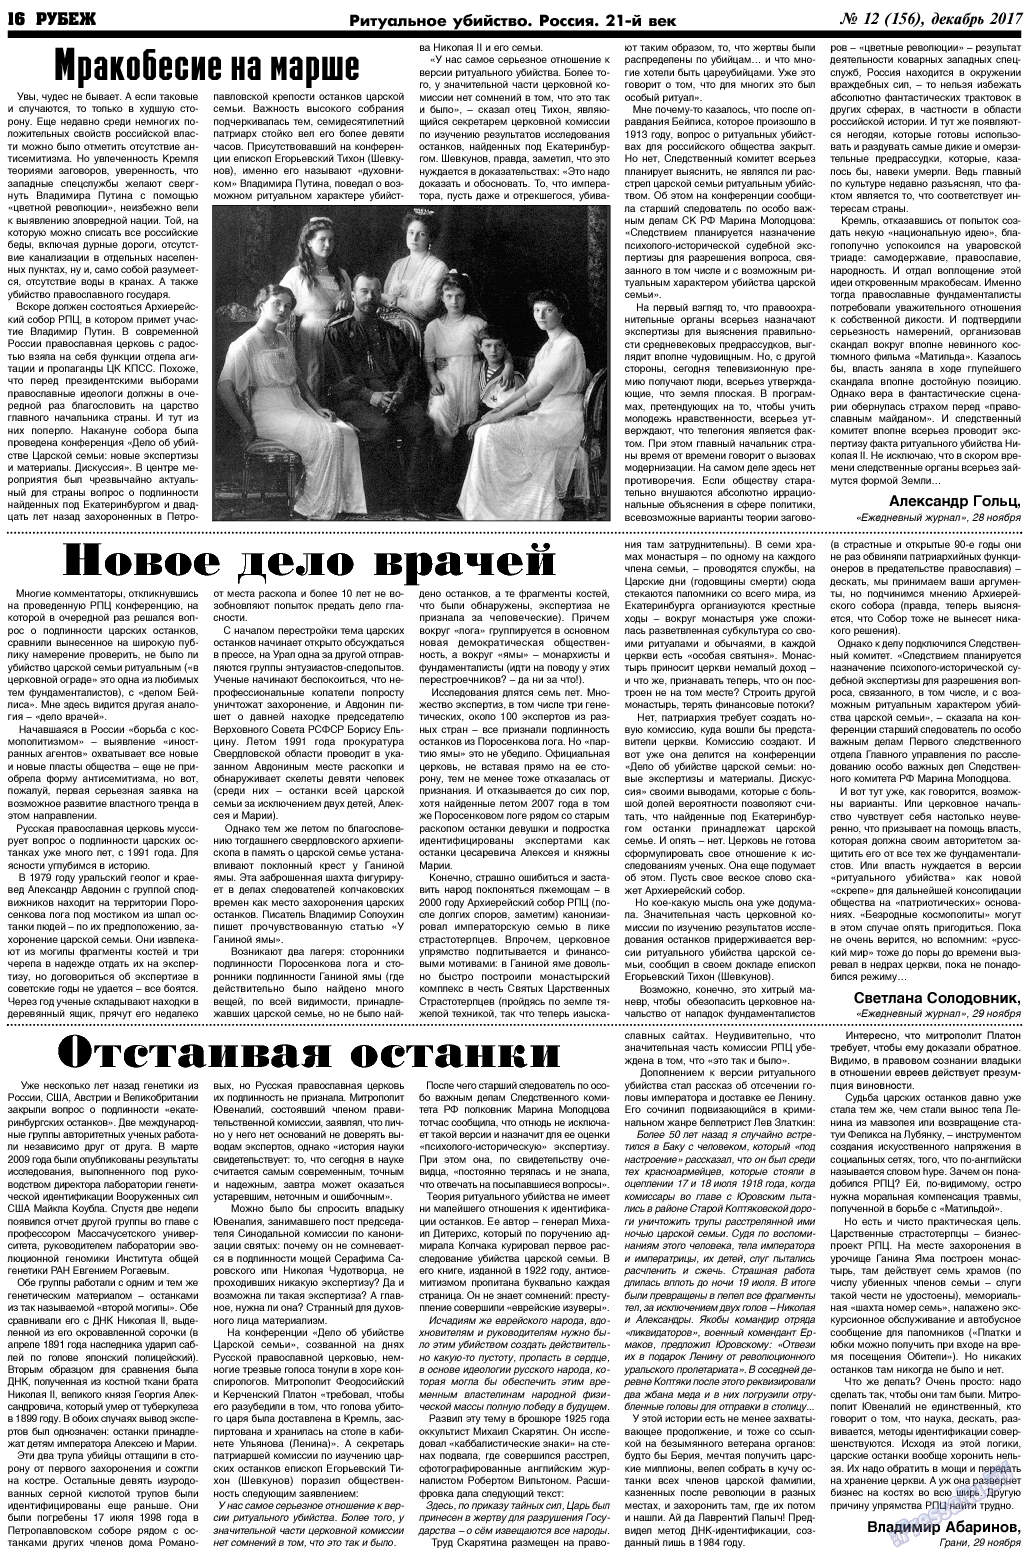 Рубеж, газета. 2017 №12 стр.16